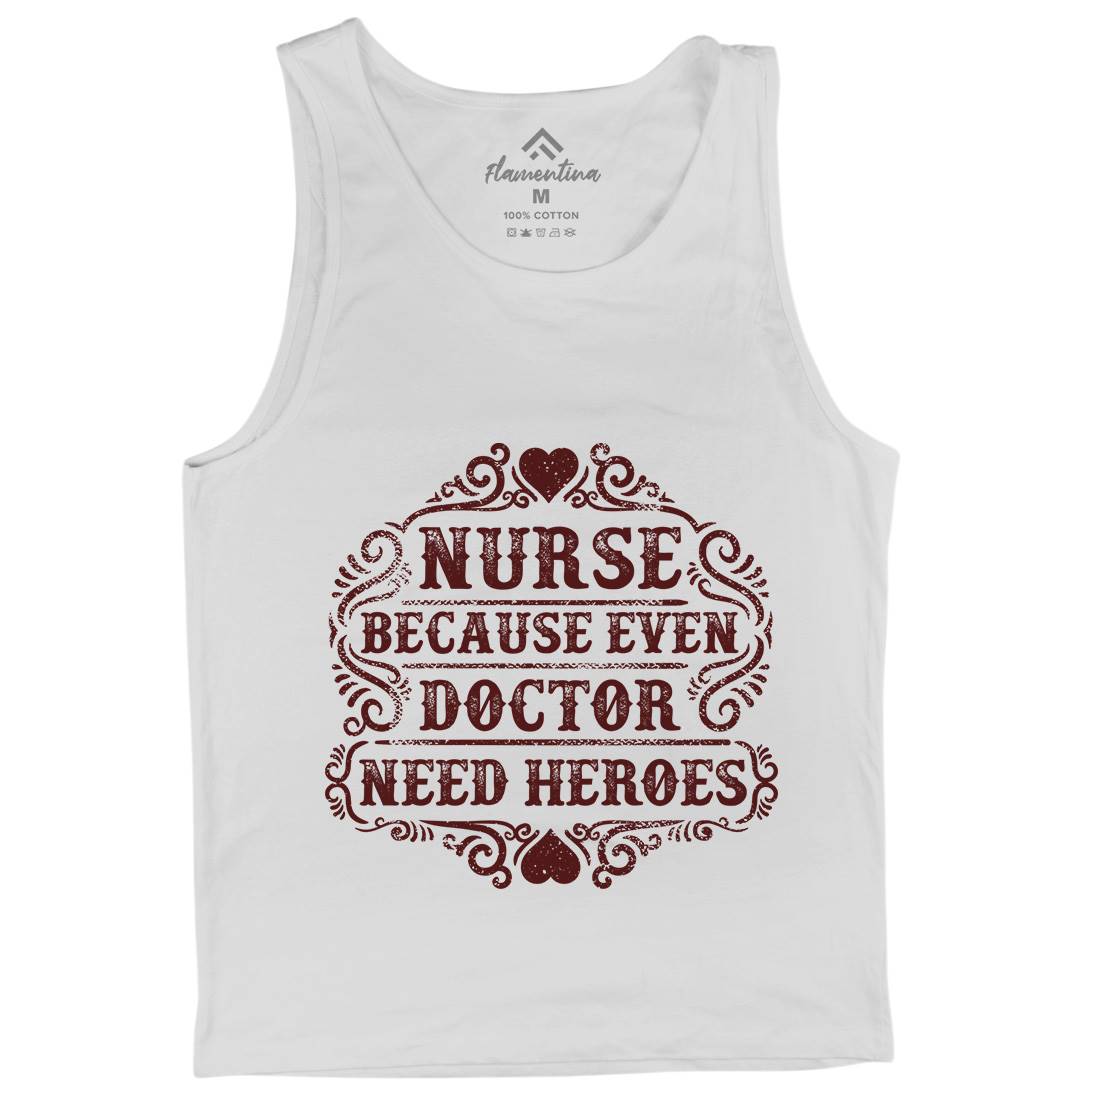 Nurse Because Even Doctor Need Heroes Mens Tank Top Vest Work C969